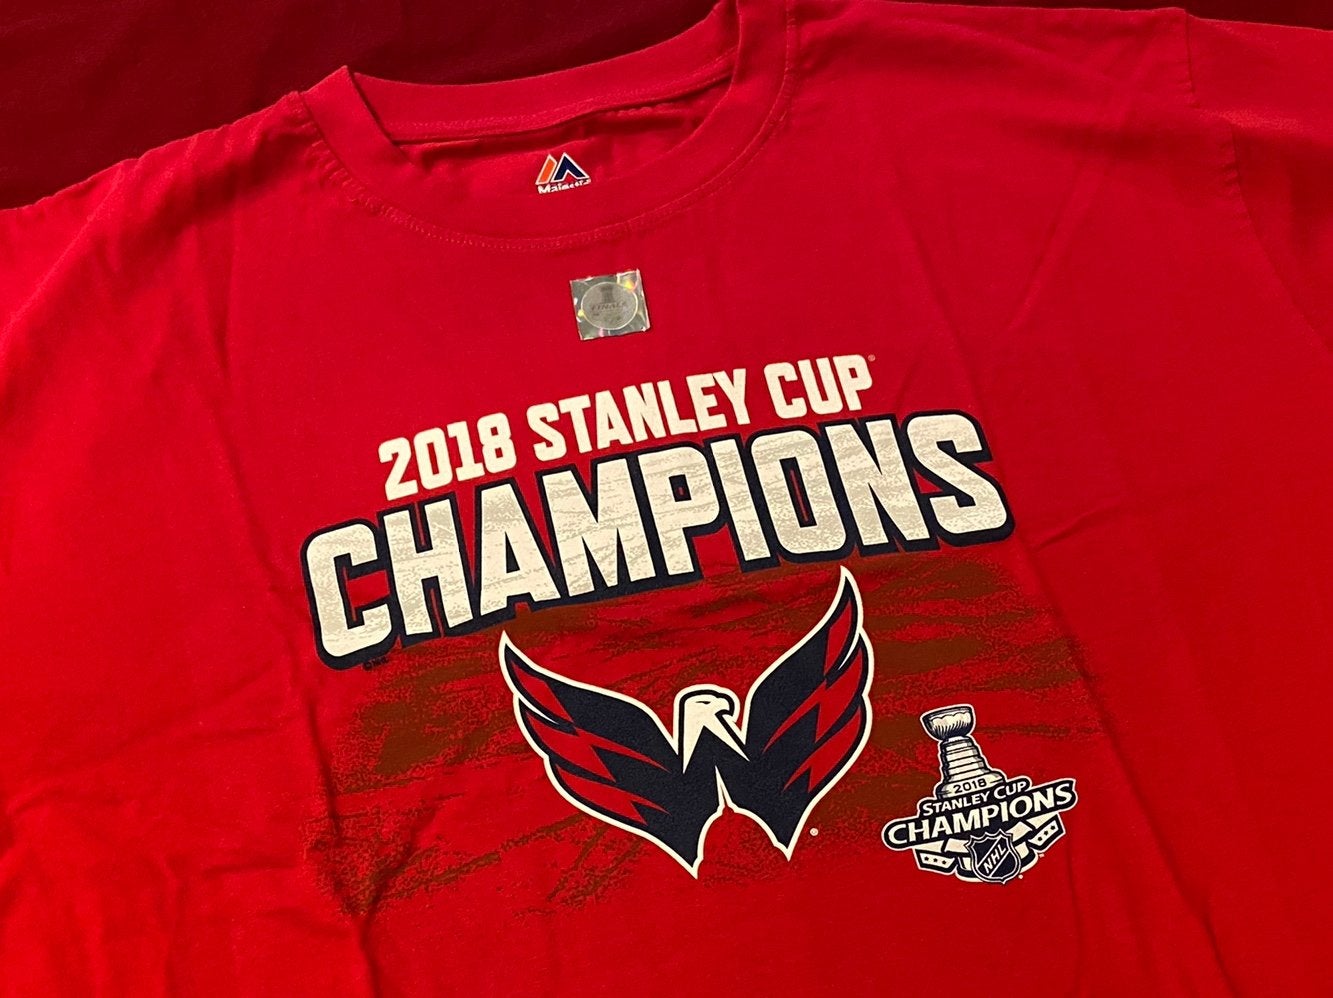 Washington Capitals 2018 Stanley Cup T-Shirt - Large